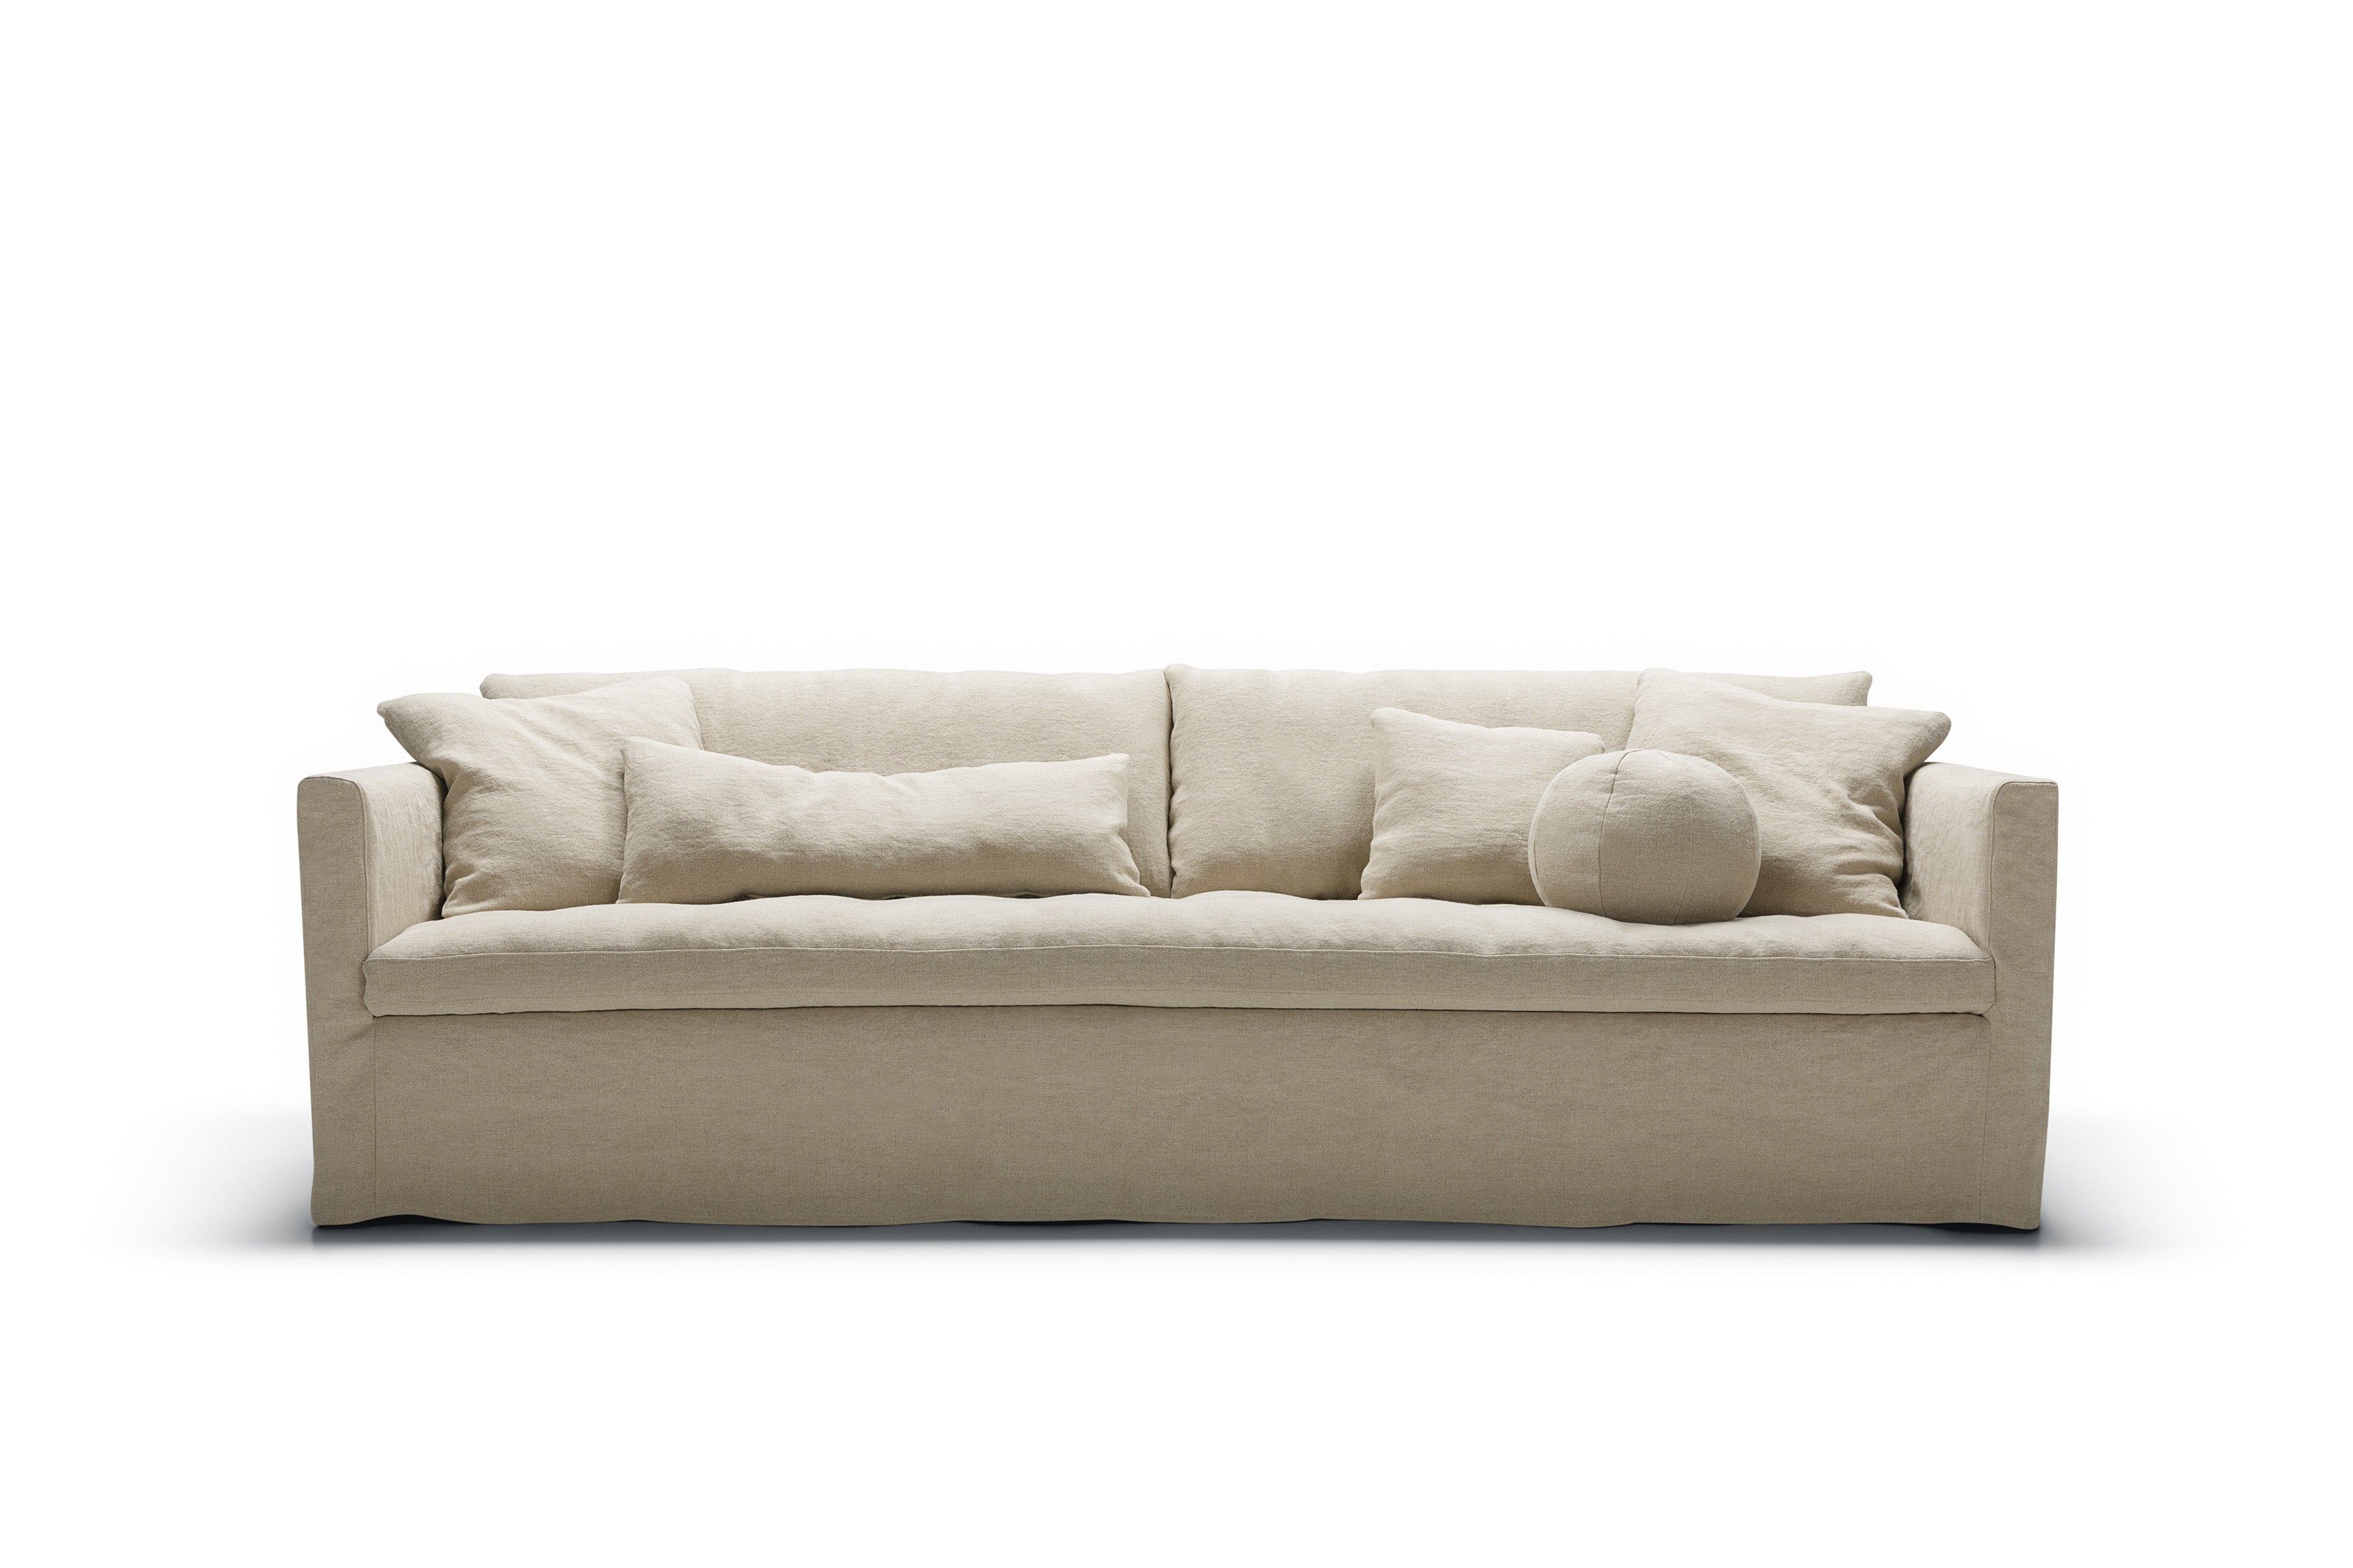 Mastrella Lana 4 Seater Sofa with Loose Cover